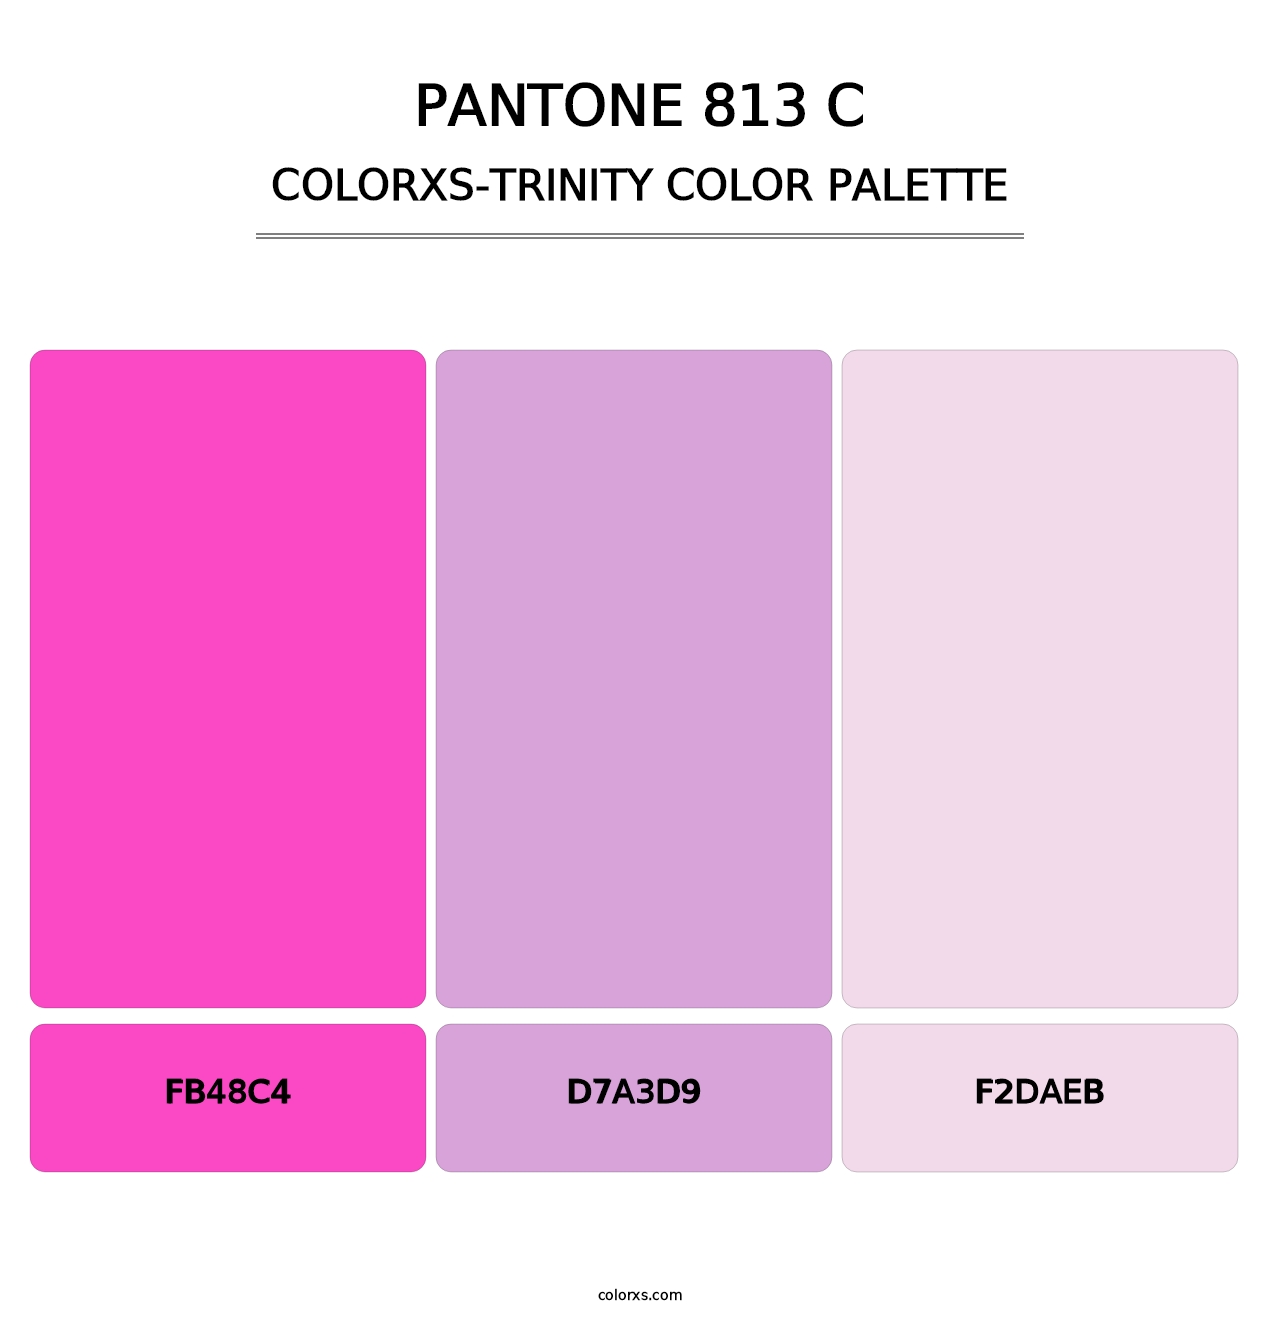 PANTONE 813 C - Colorxs Trinity Palette